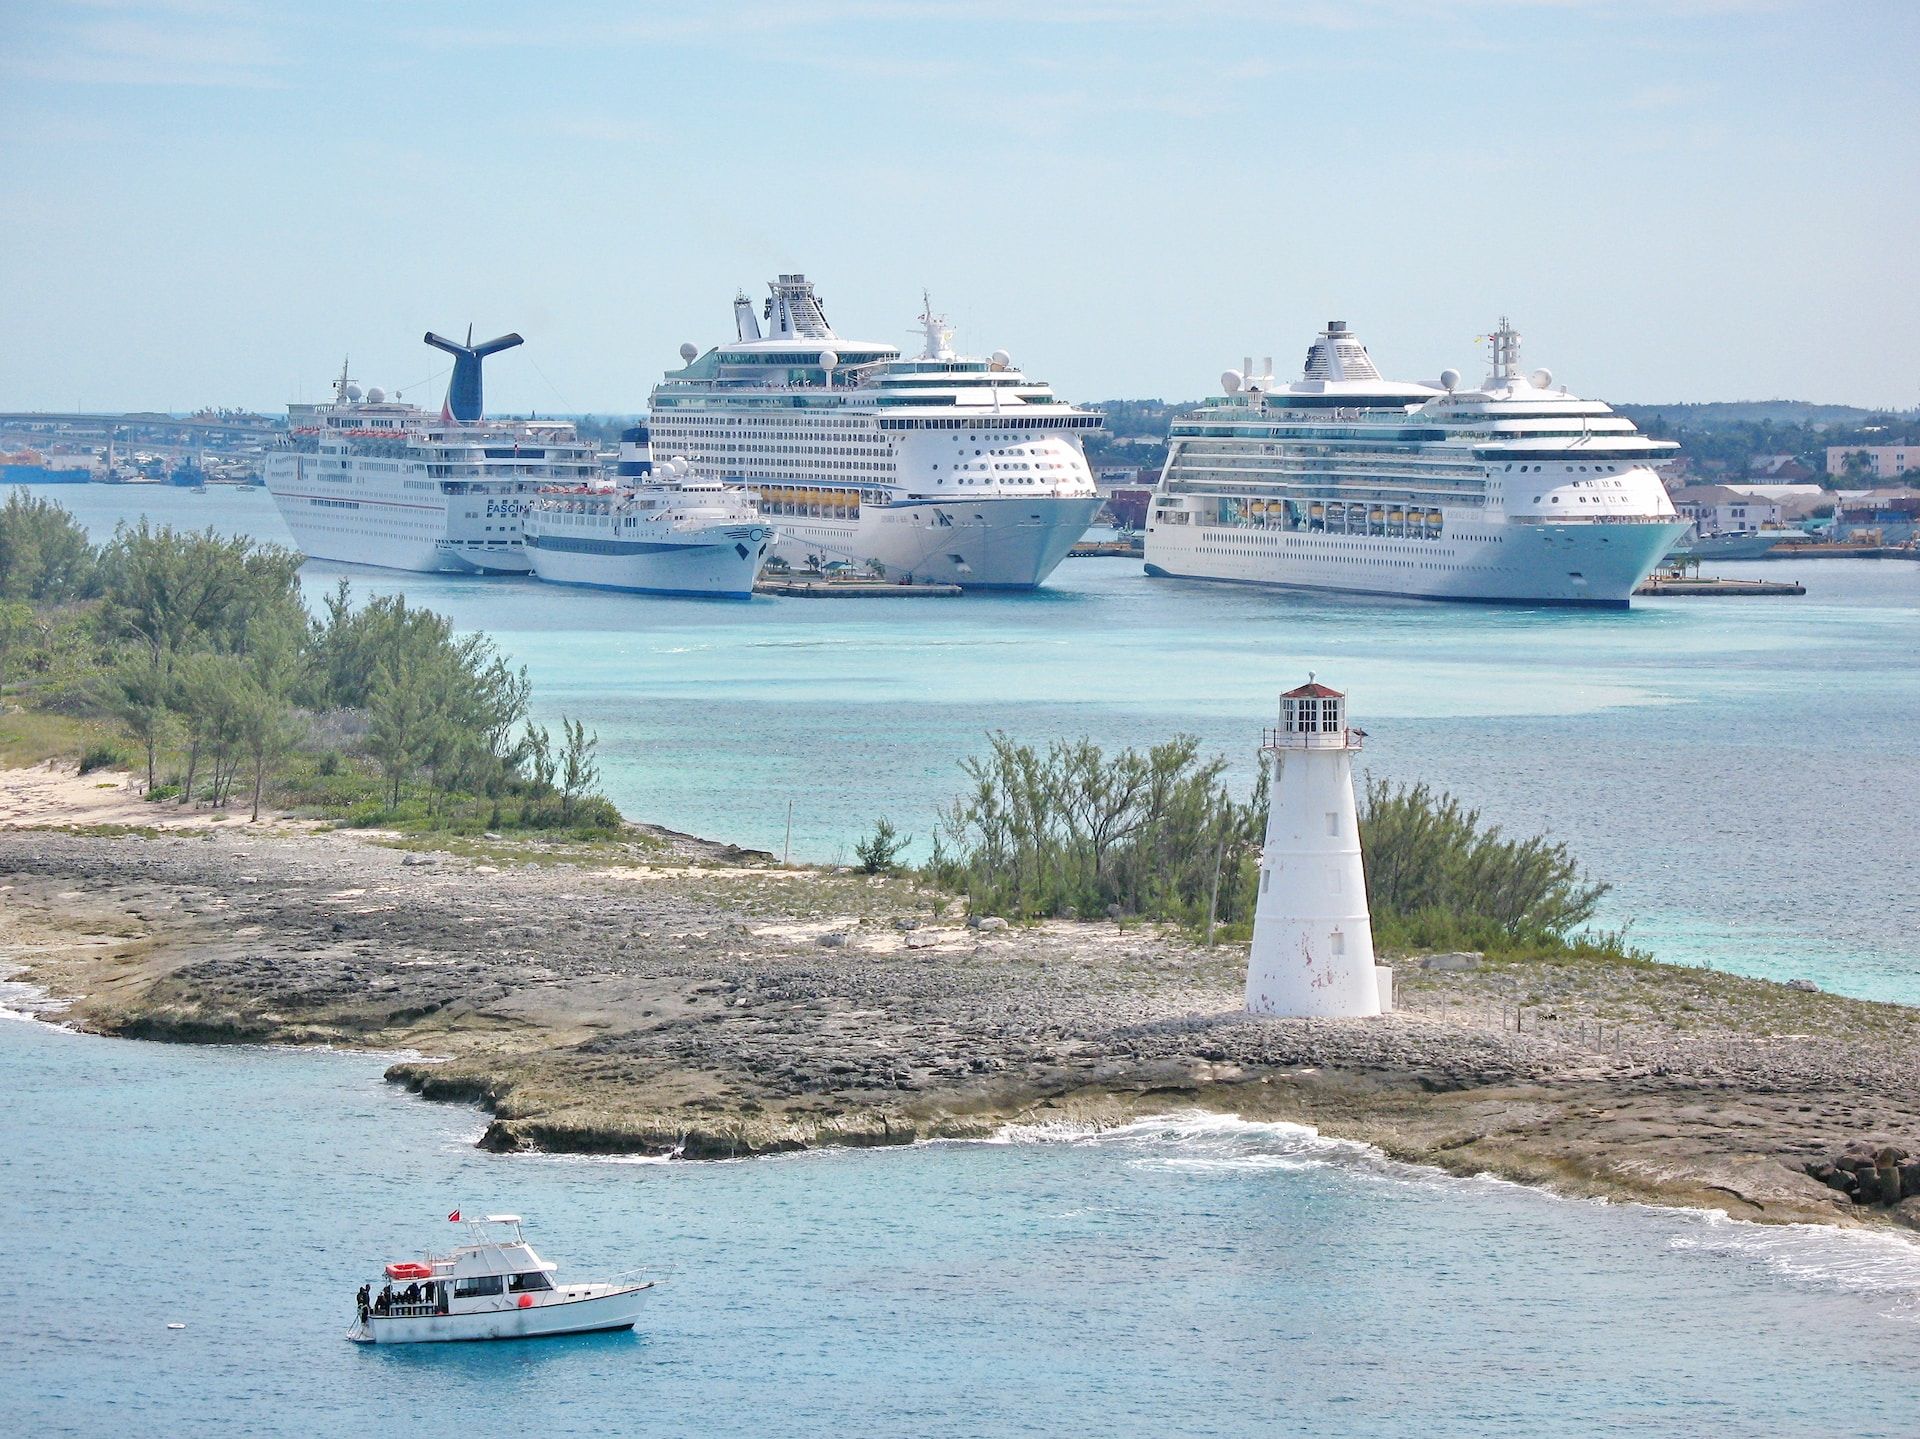 Cruise Ships docking in the massive ports in Nassau, Bahamas